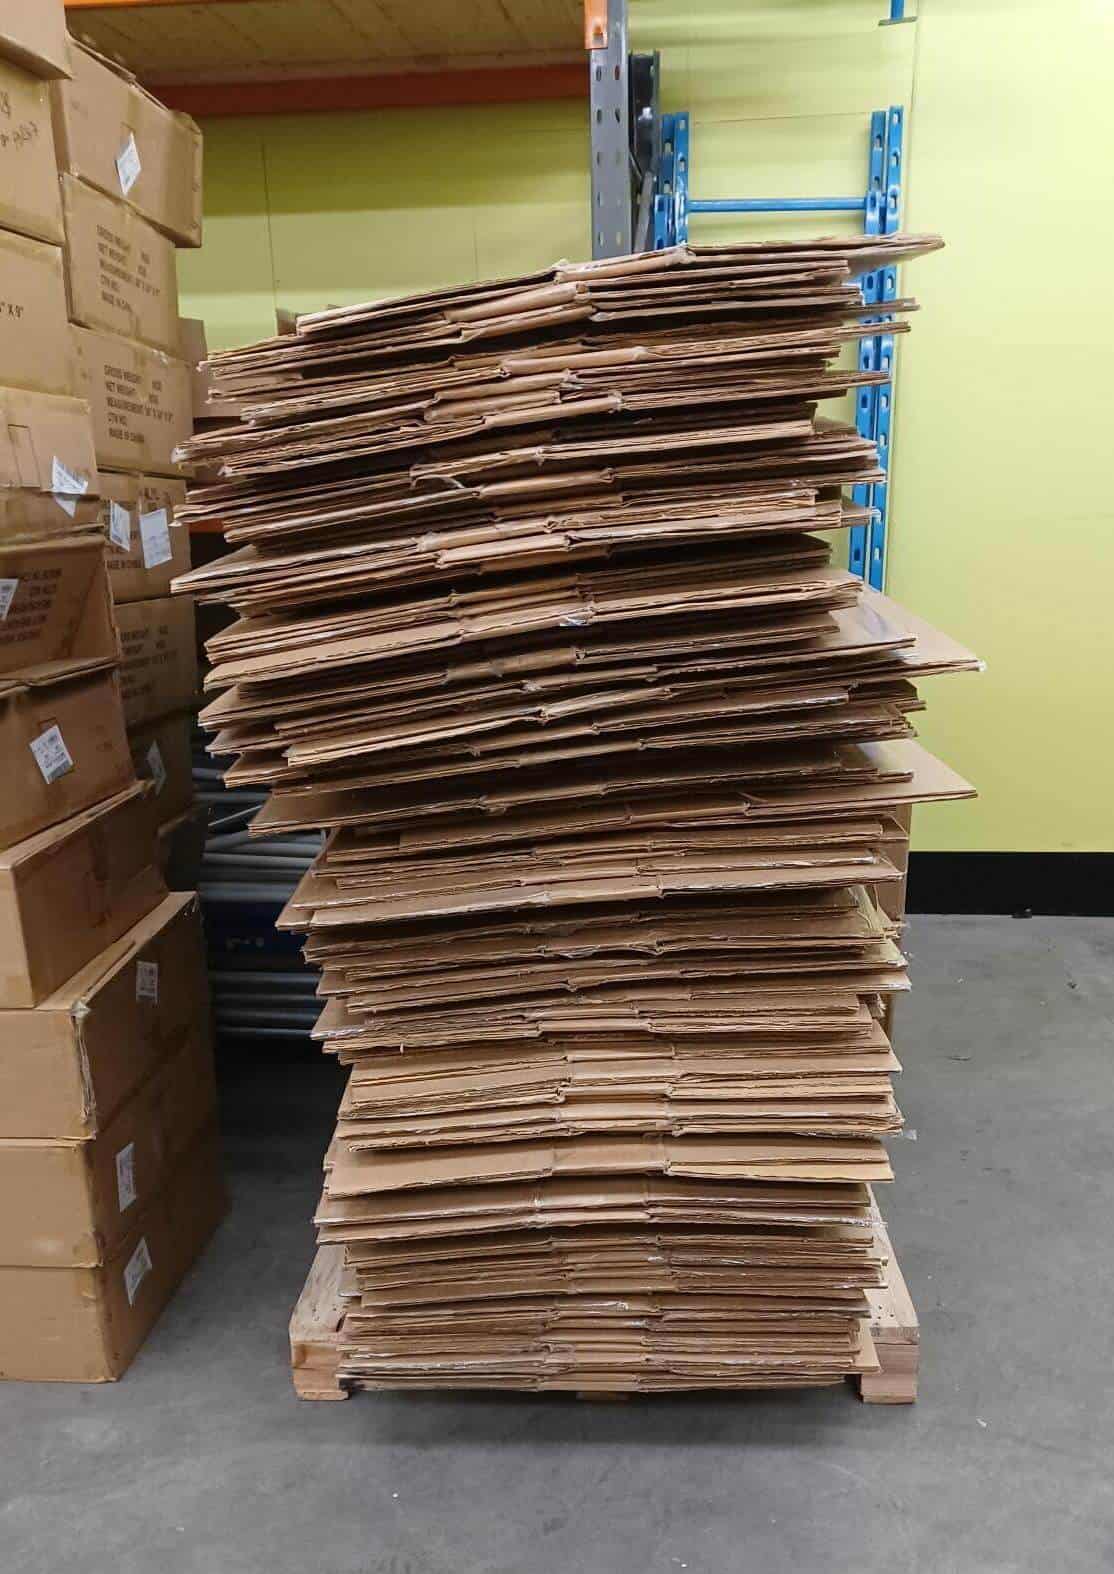 cardboard stacked on pallets bristol